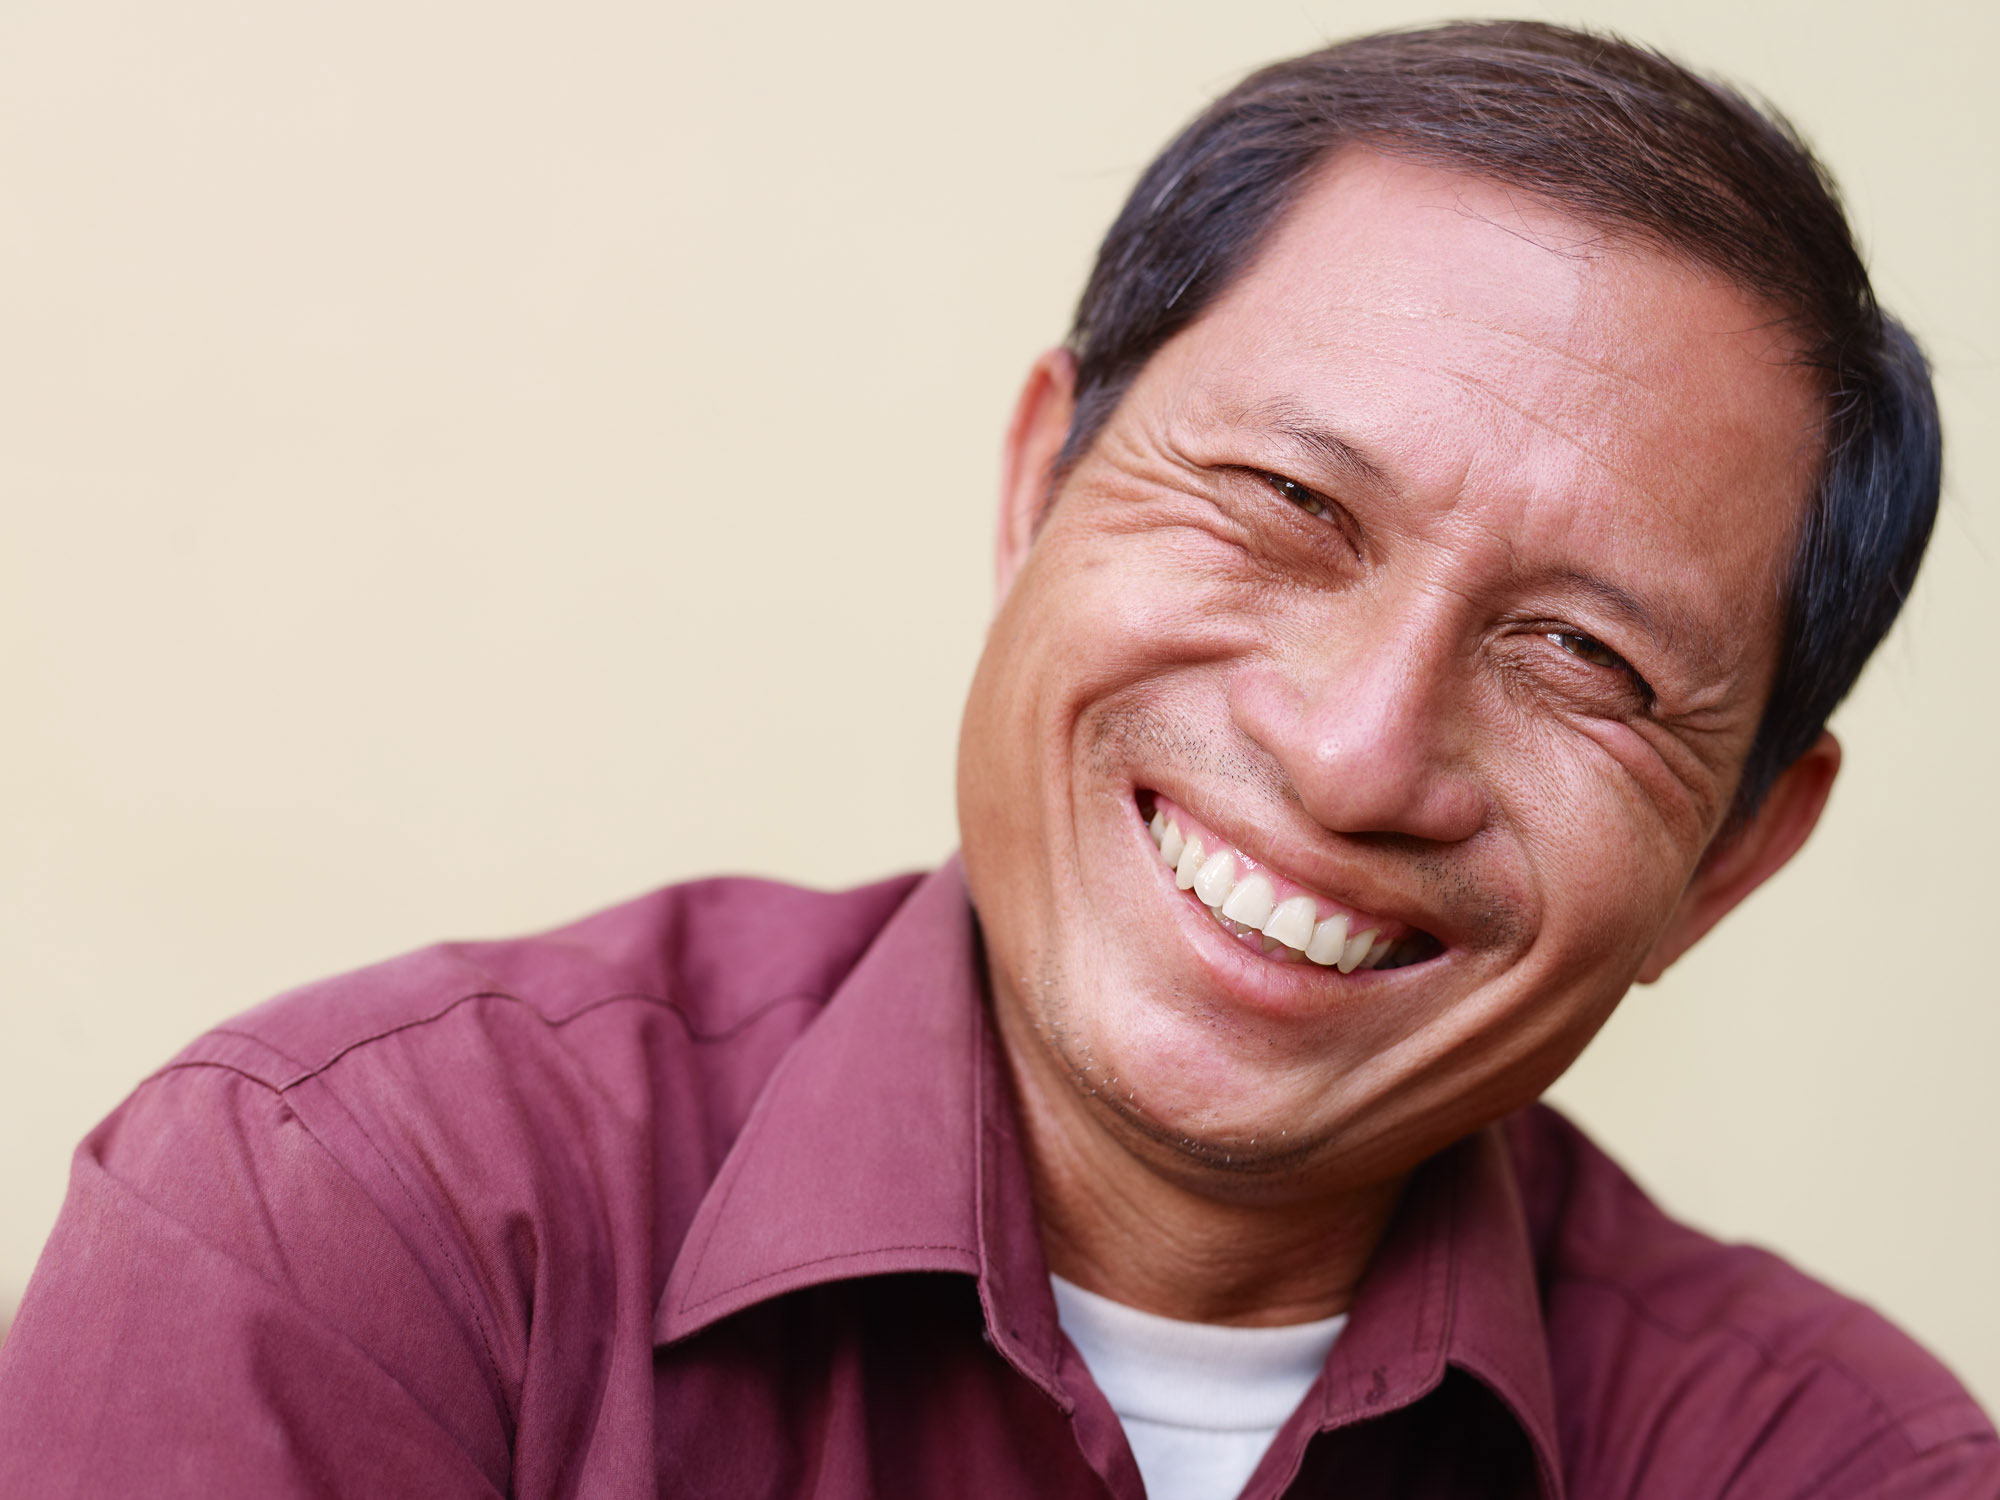 elderly man showing his partial dentures